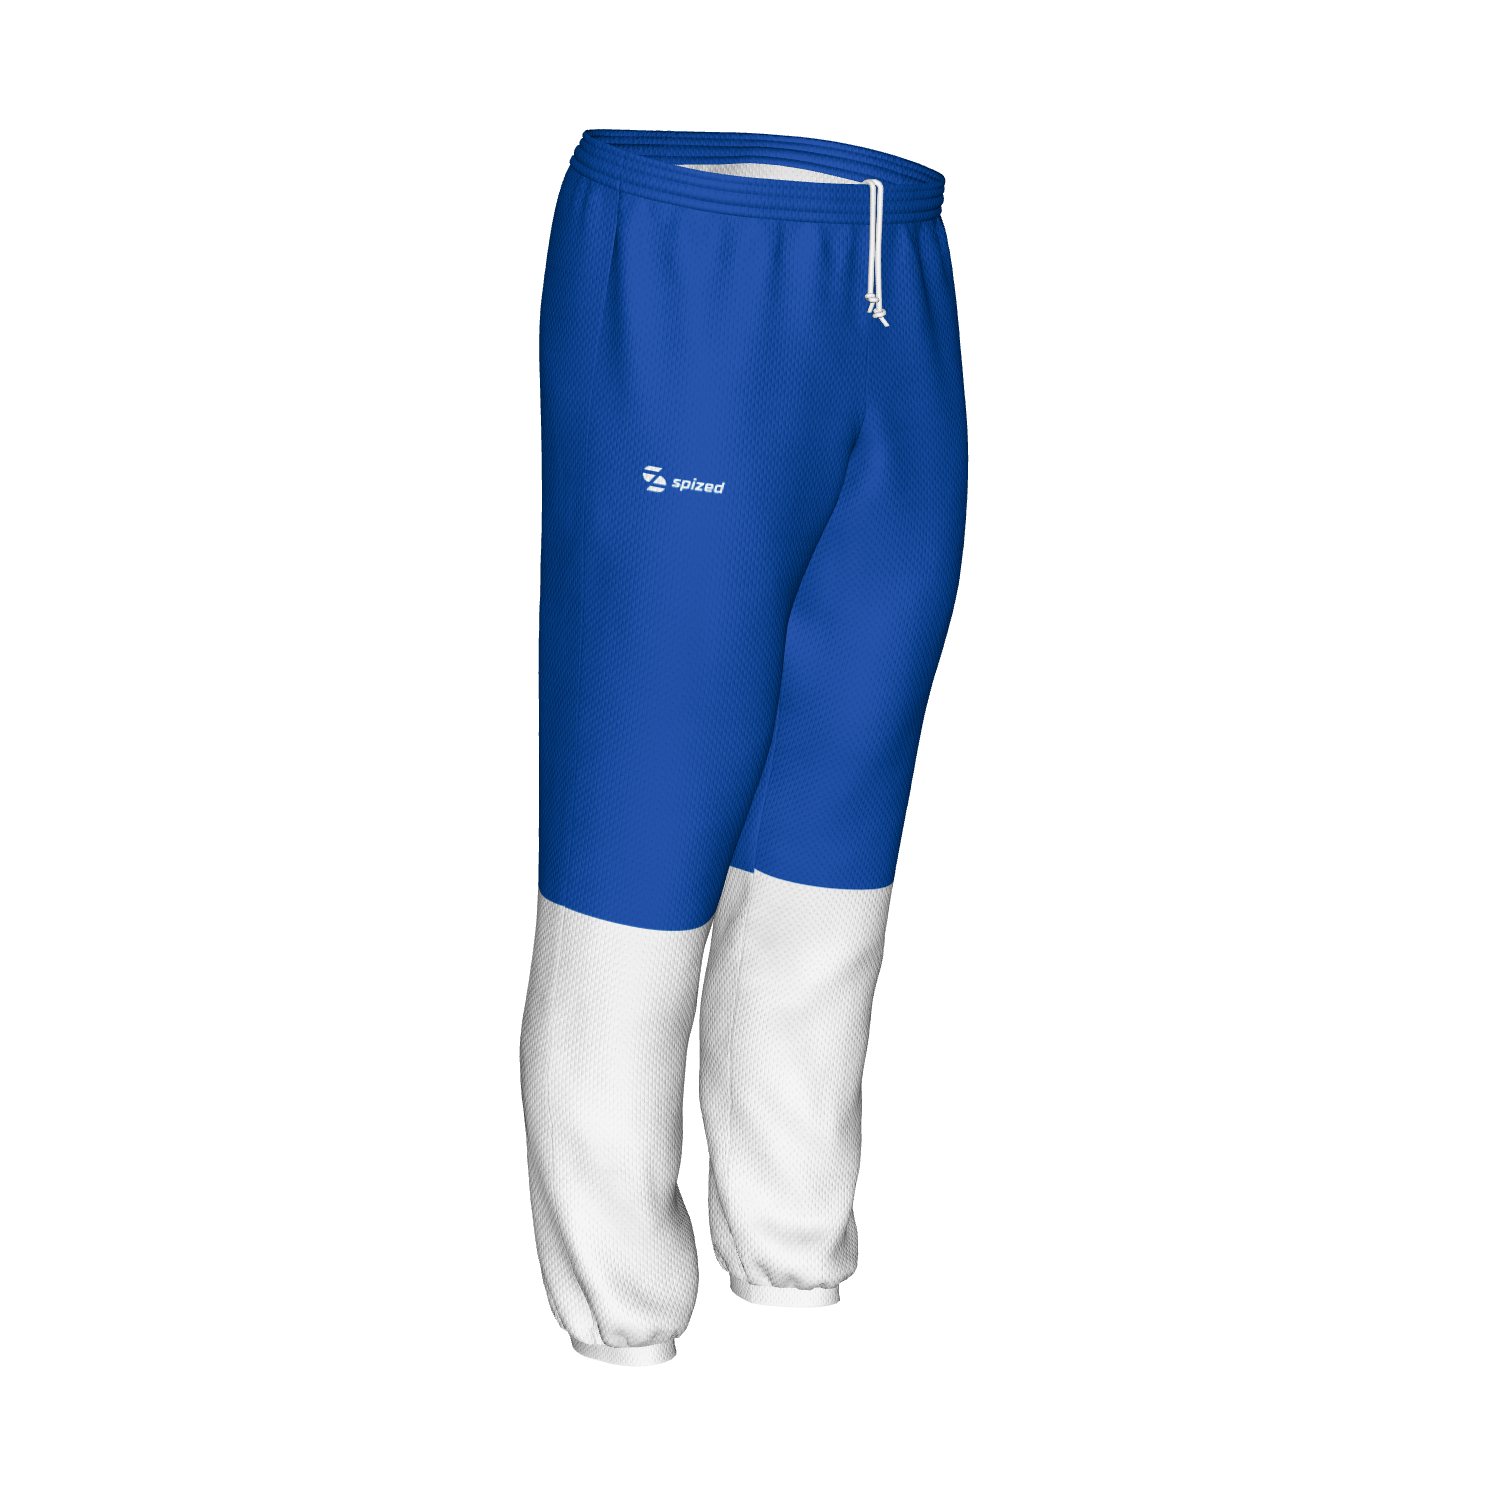 Lund men’s handball goalie pants